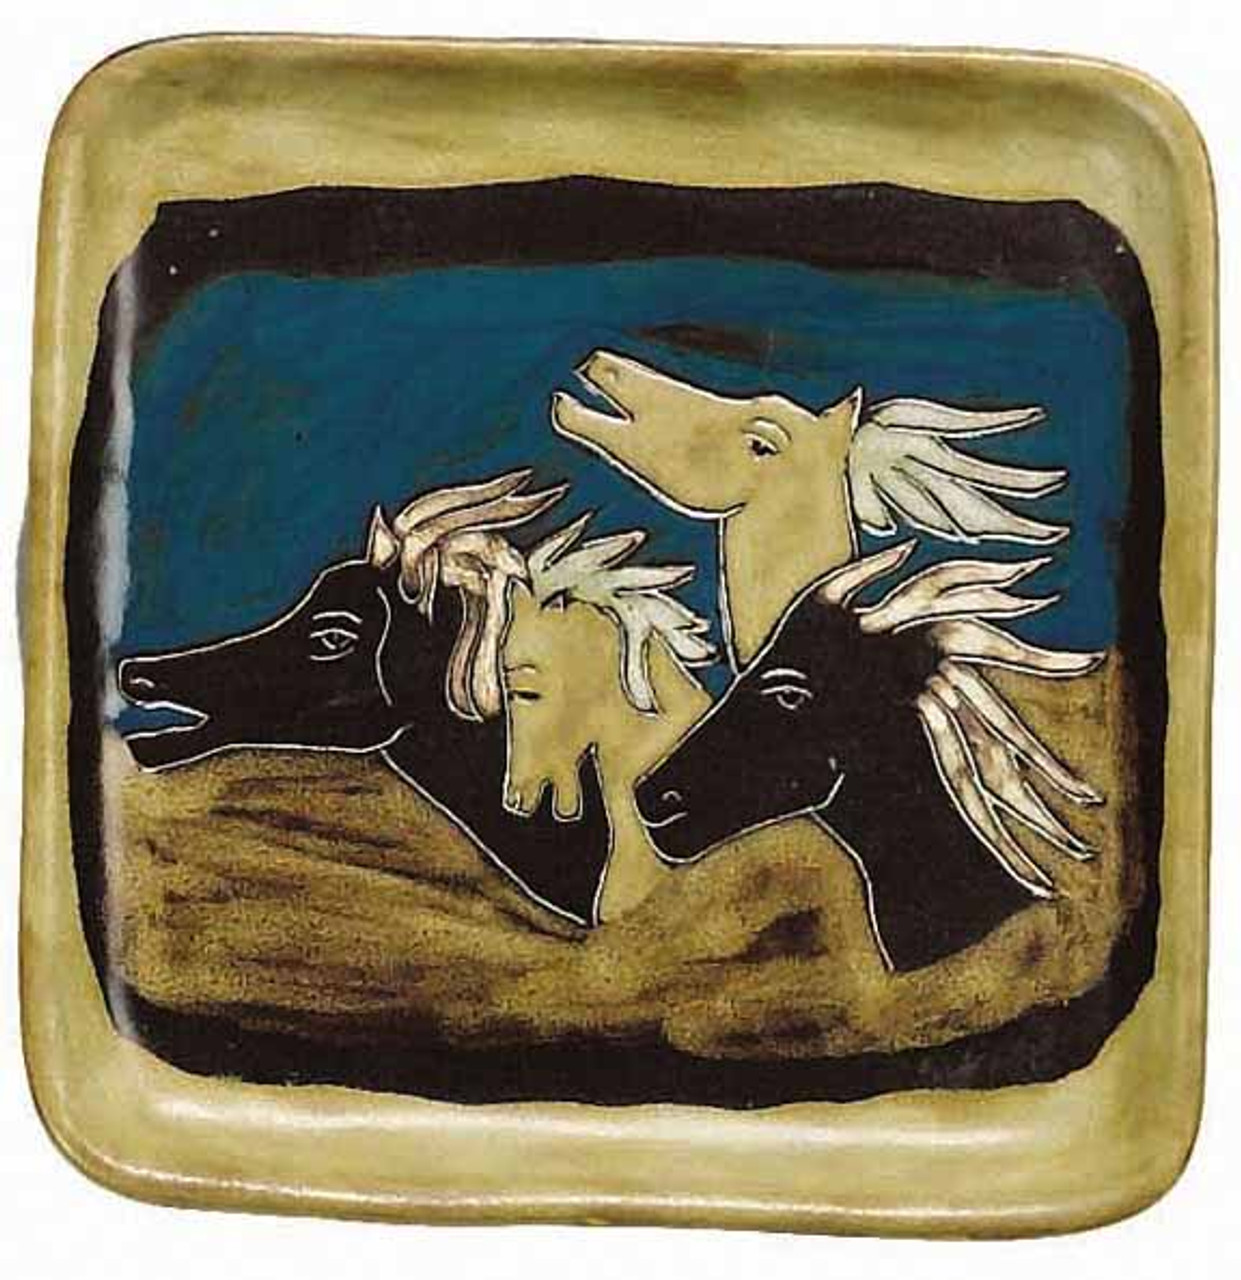 Mara Square Plate 8" - Horses